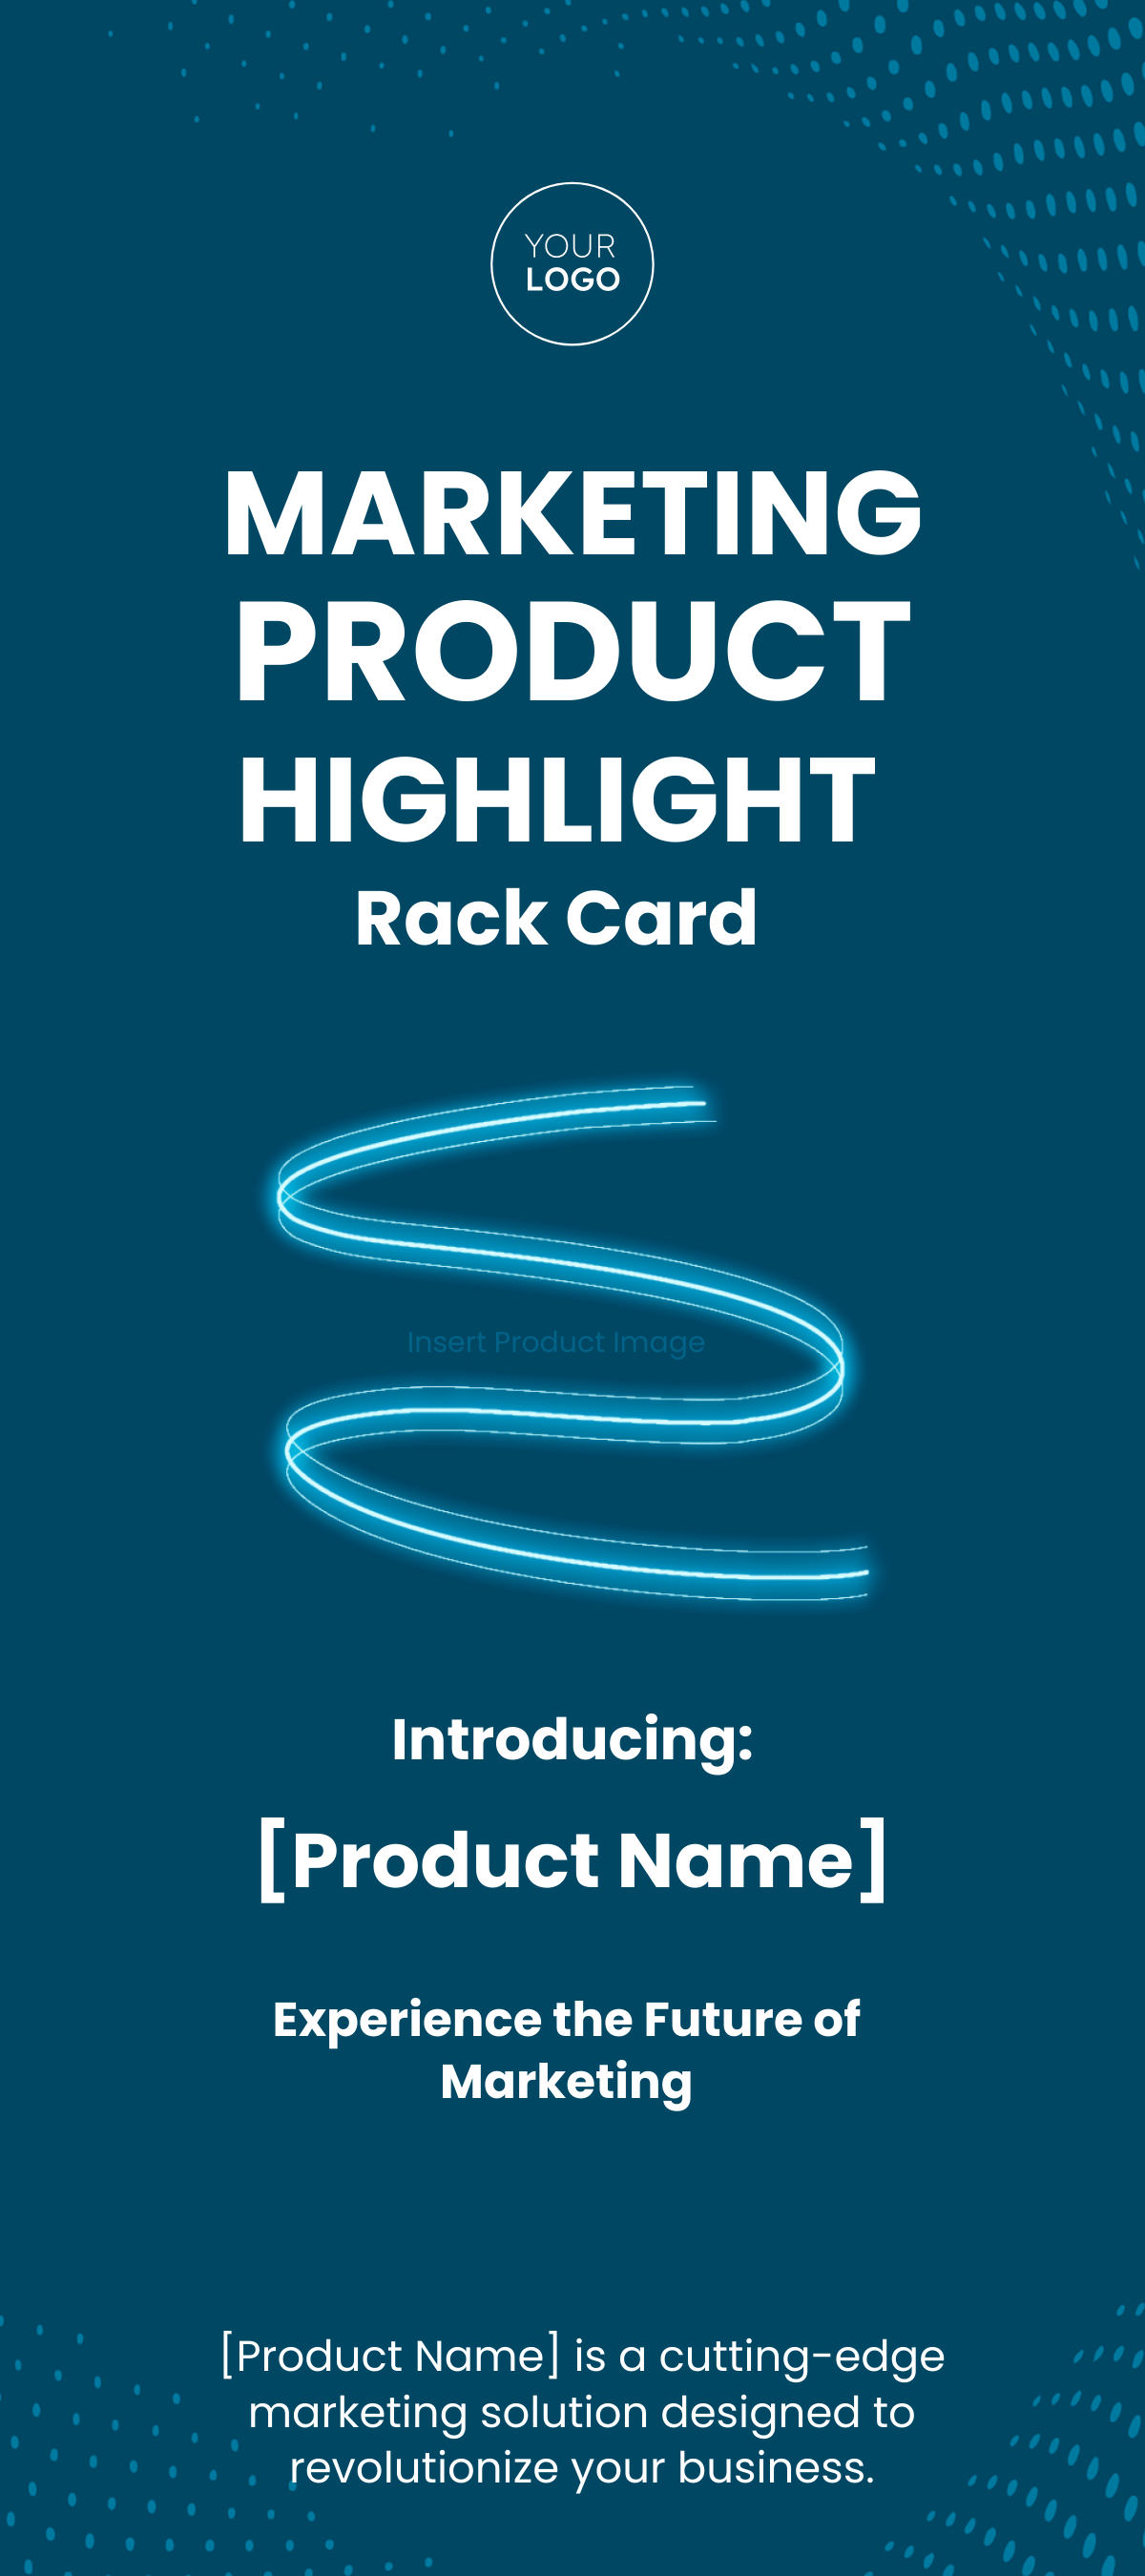 Marketing Product Highlight Rack Card Template